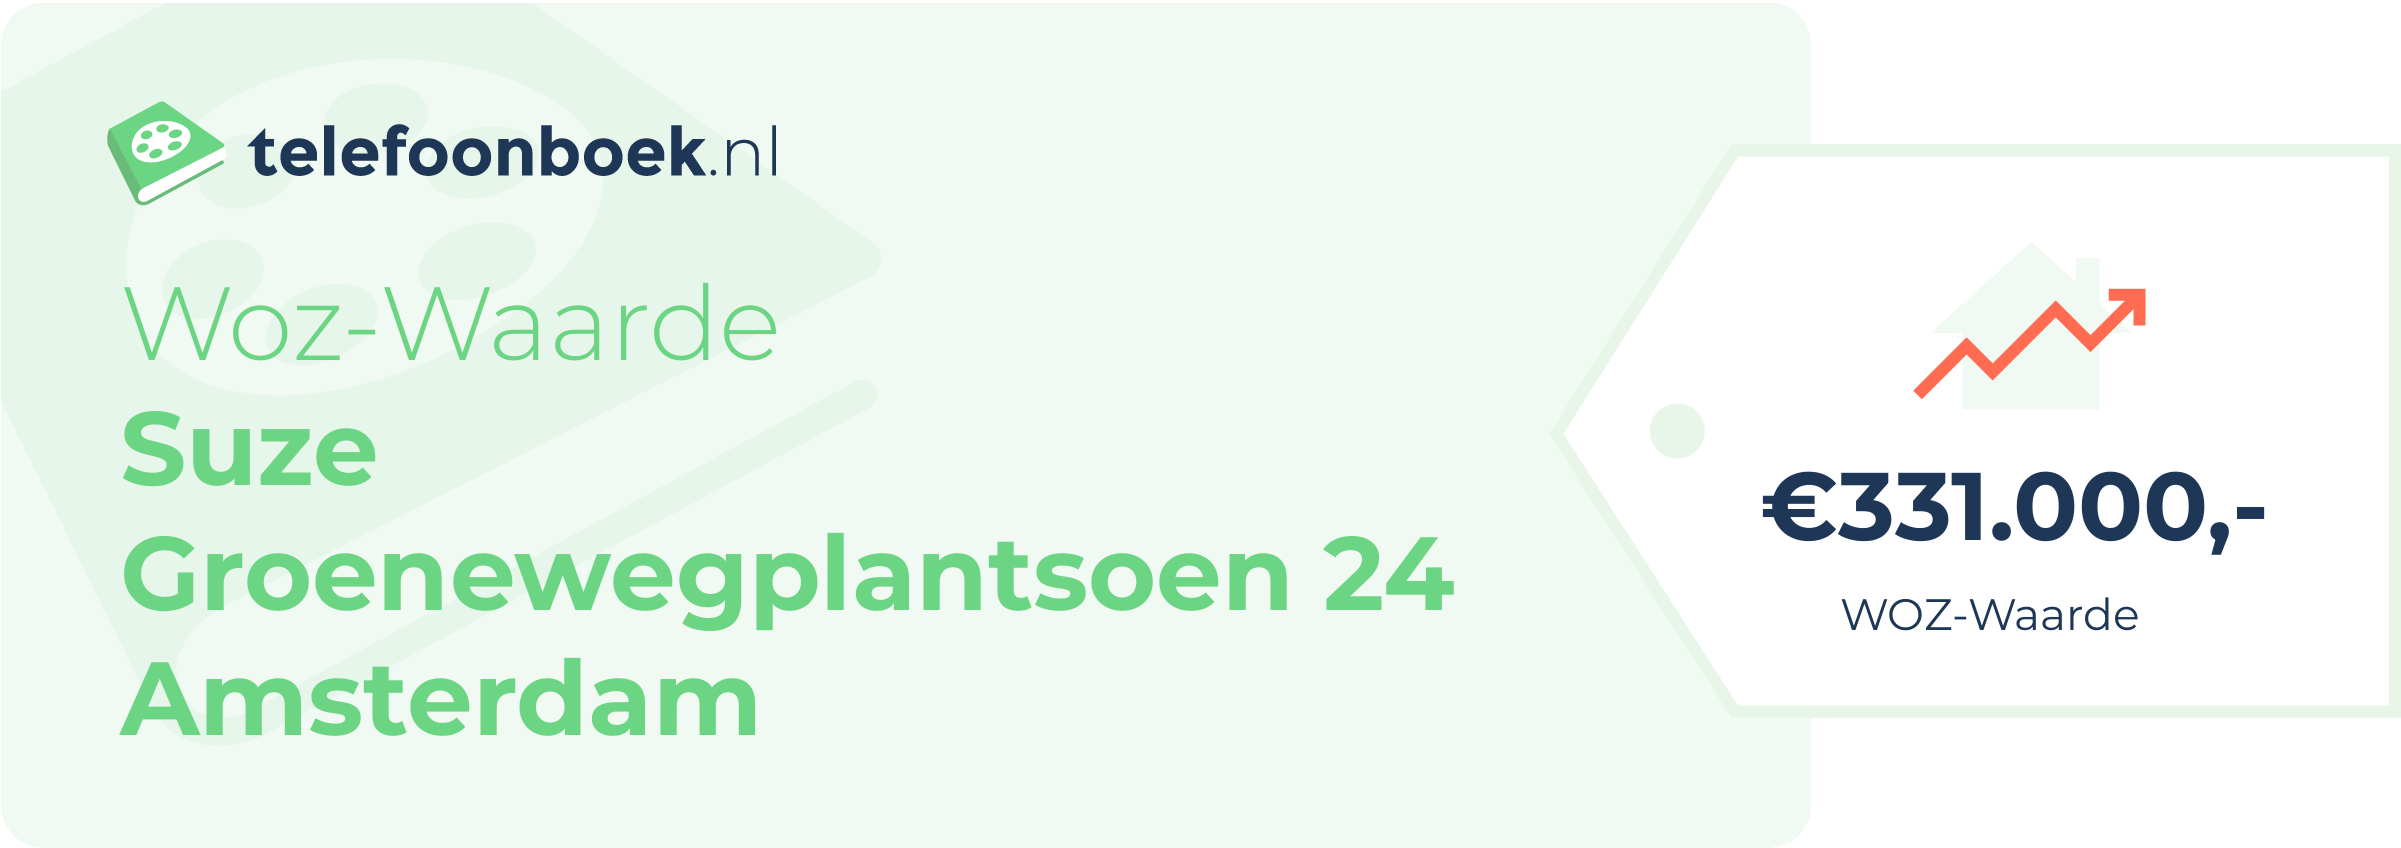 WOZ-waarde Suze Groenewegplantsoen 24 Amsterdam